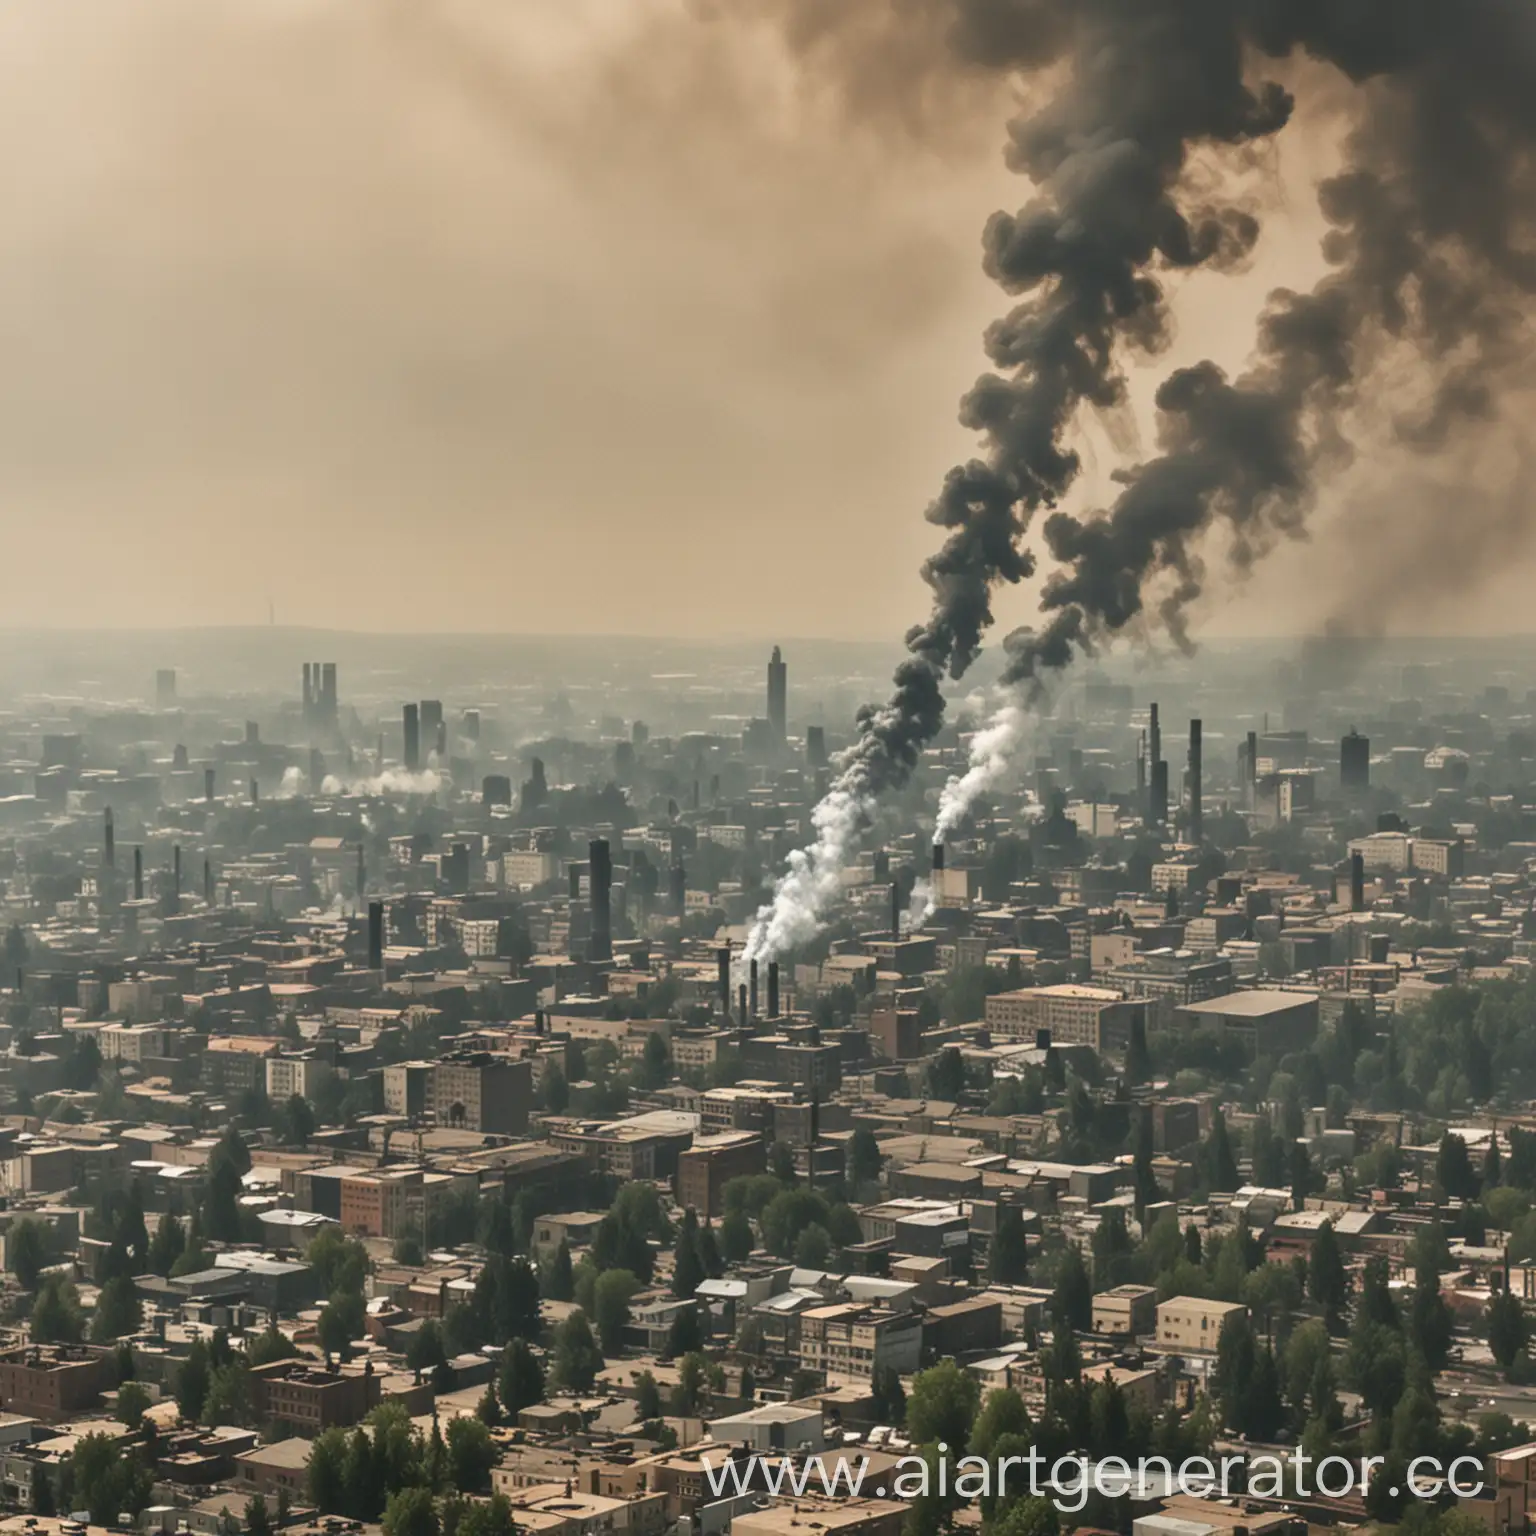 Industrial-Cityscape-Shrouded-in-Smoky-Haze